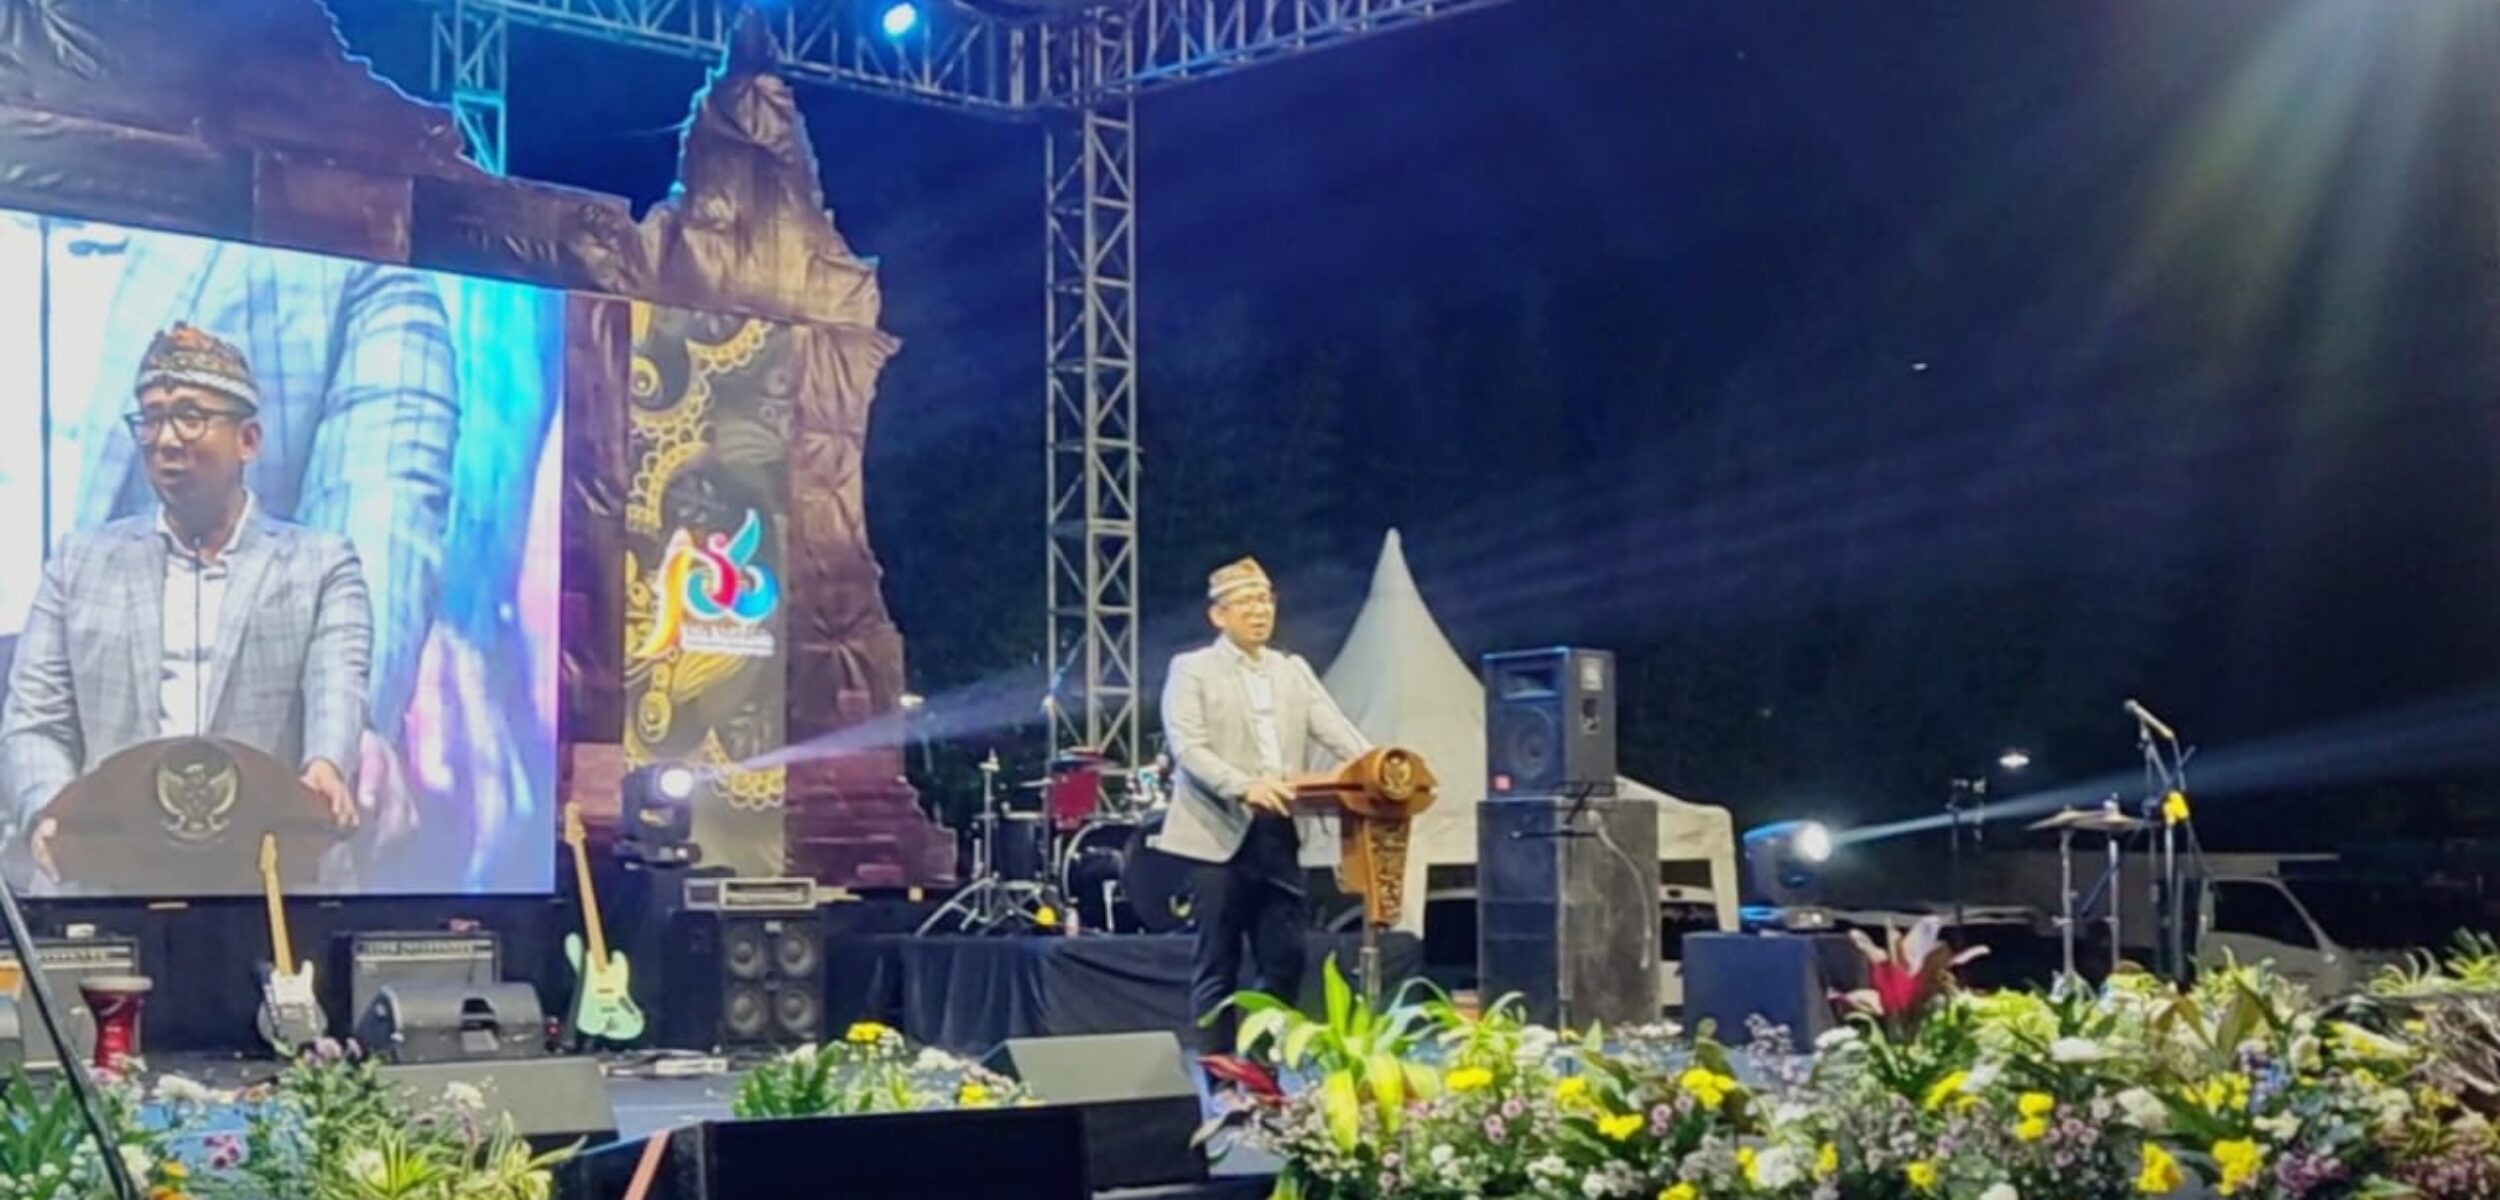 Mas Pj Wali Kota saat berikan sambutan acara Festival Bakar Sate Kota Mojokerto. (Alief Wahdana/kabarterdepan.com) 